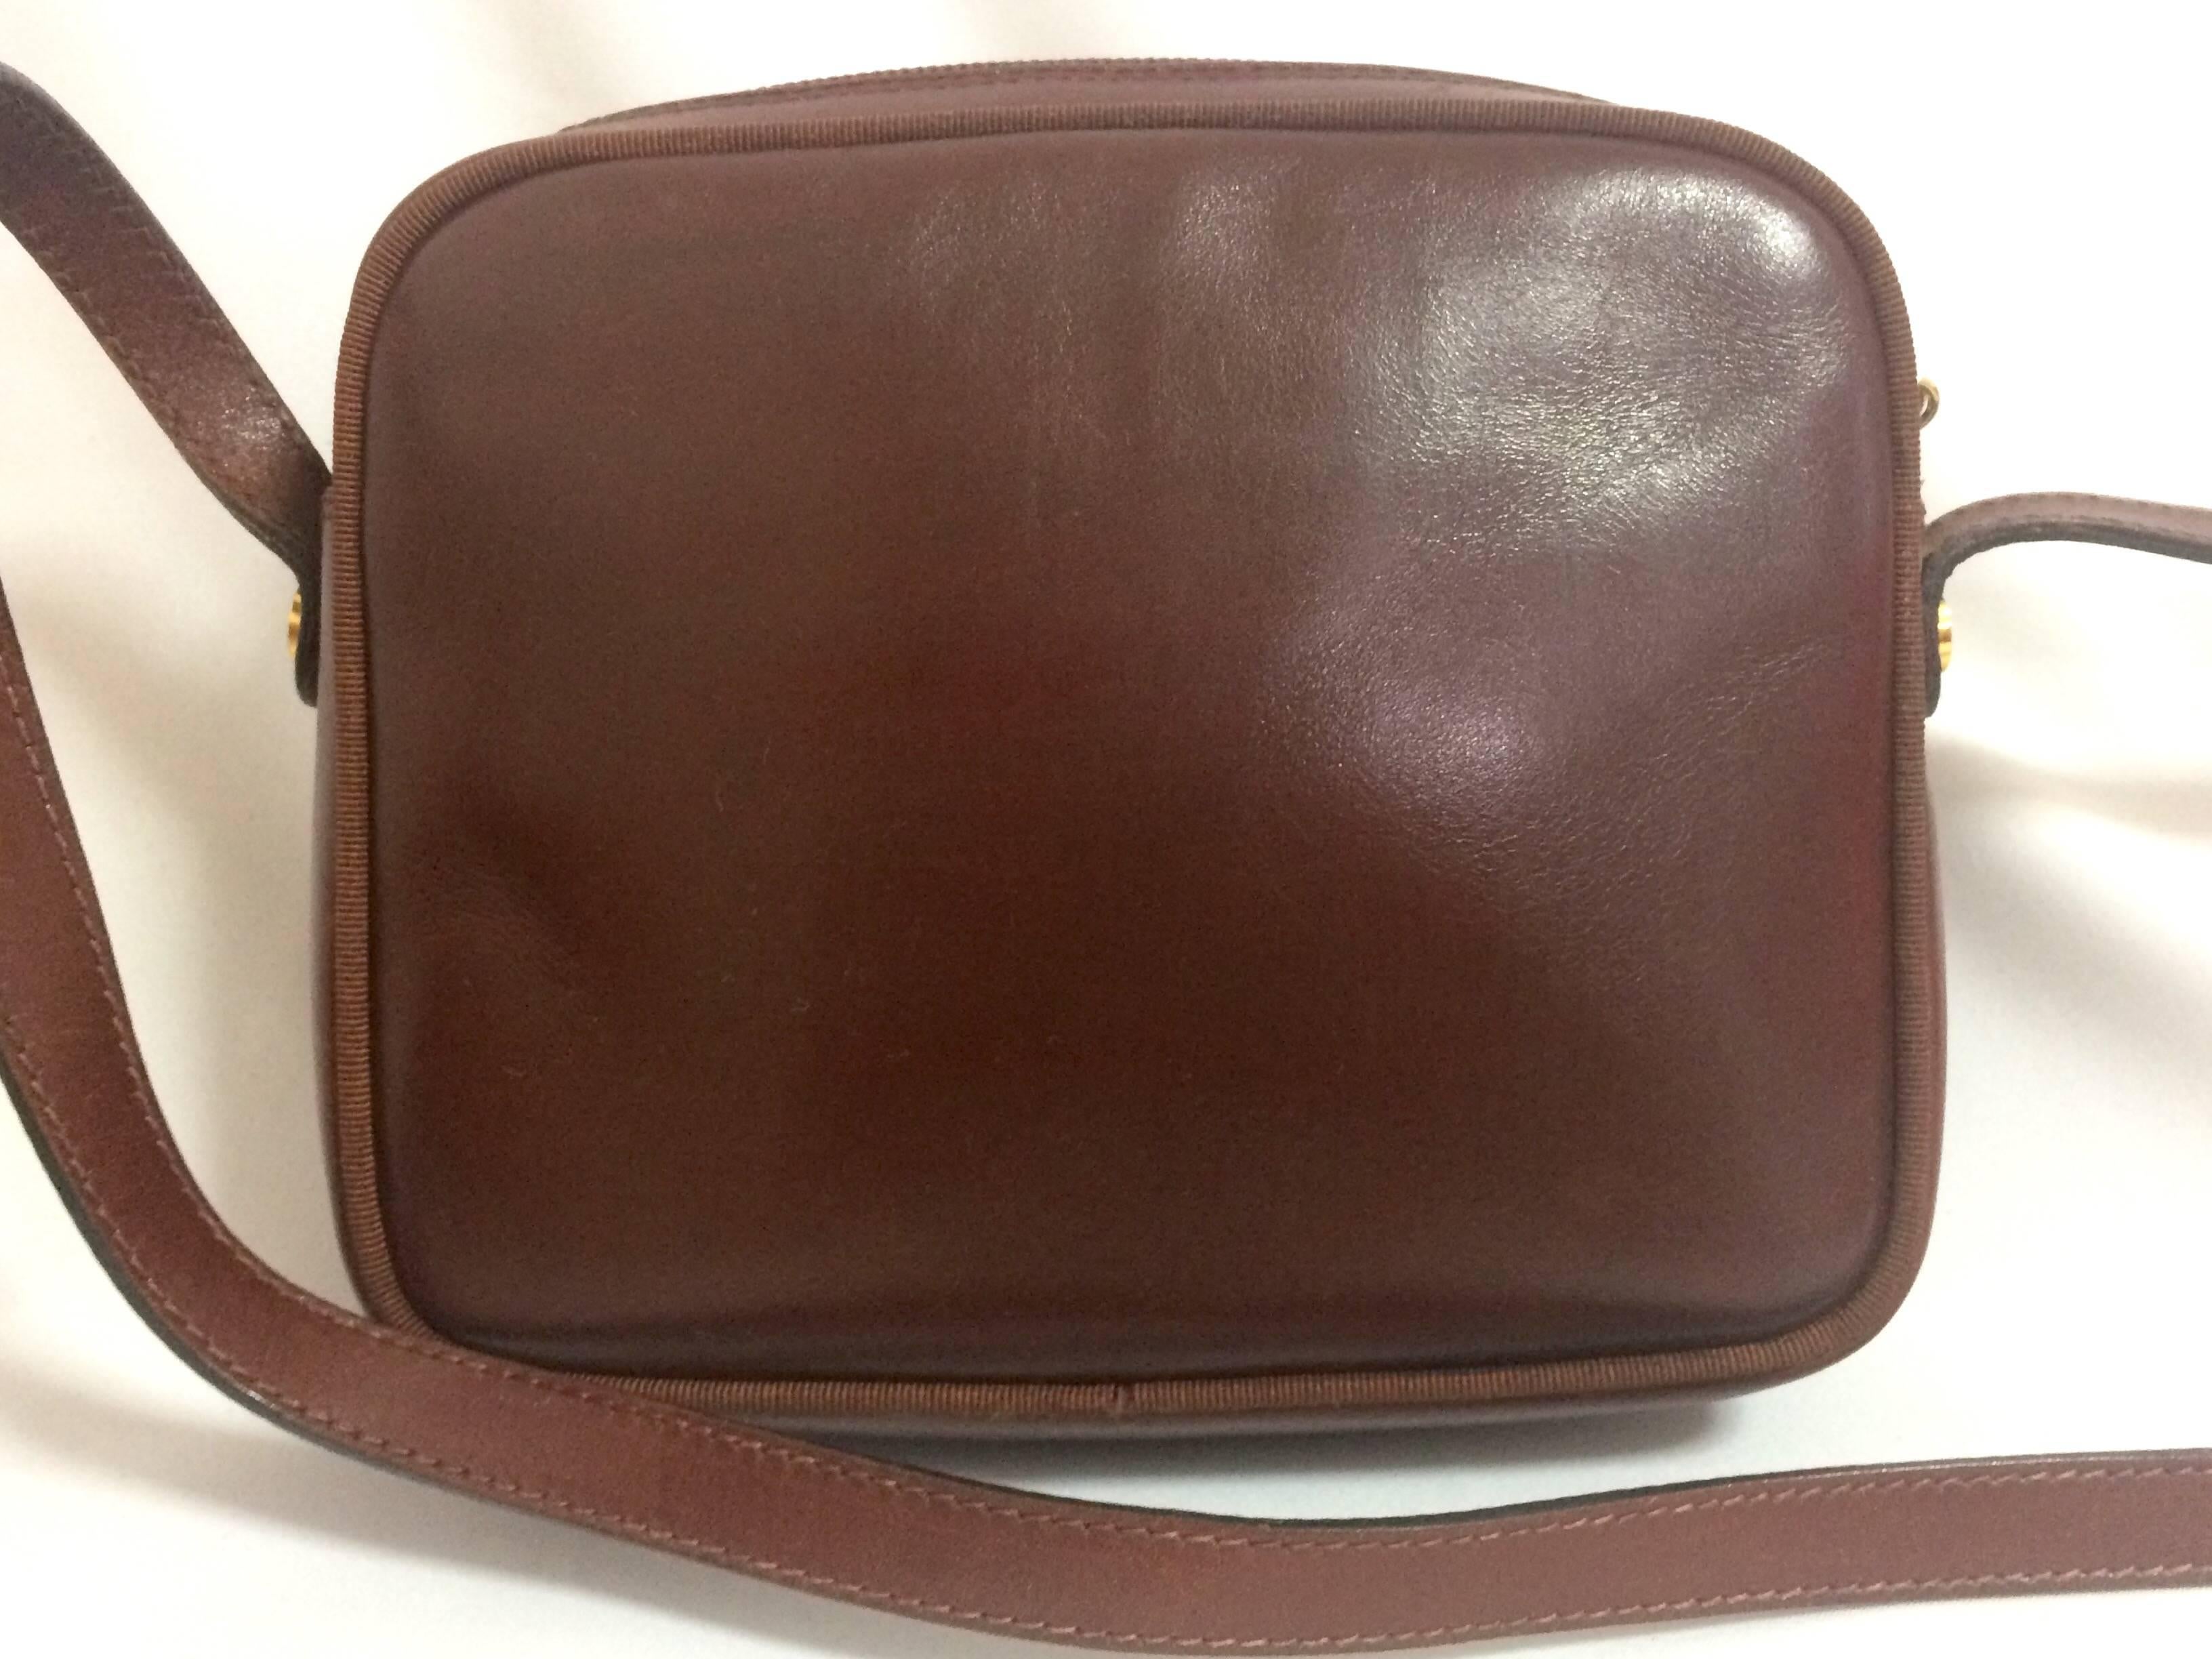 Brown Vintage Salvatore Ferragamo vara collection brown leather purse with logo motif.